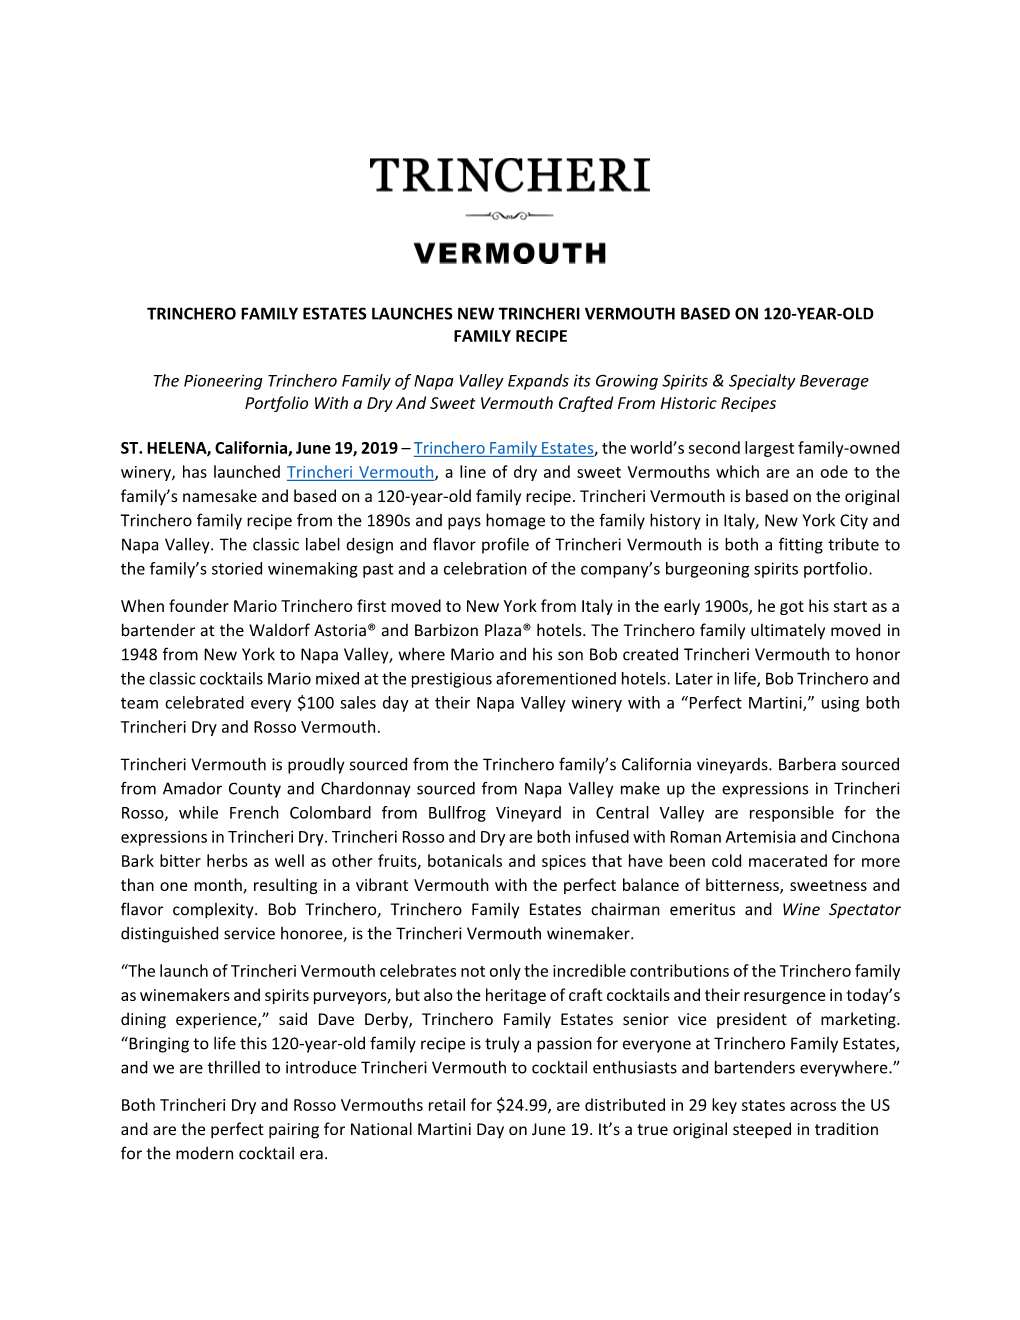 Trinchero Family Estates Launches New Trincheri Vermouth Based on 120-Year-Old Family Recipe